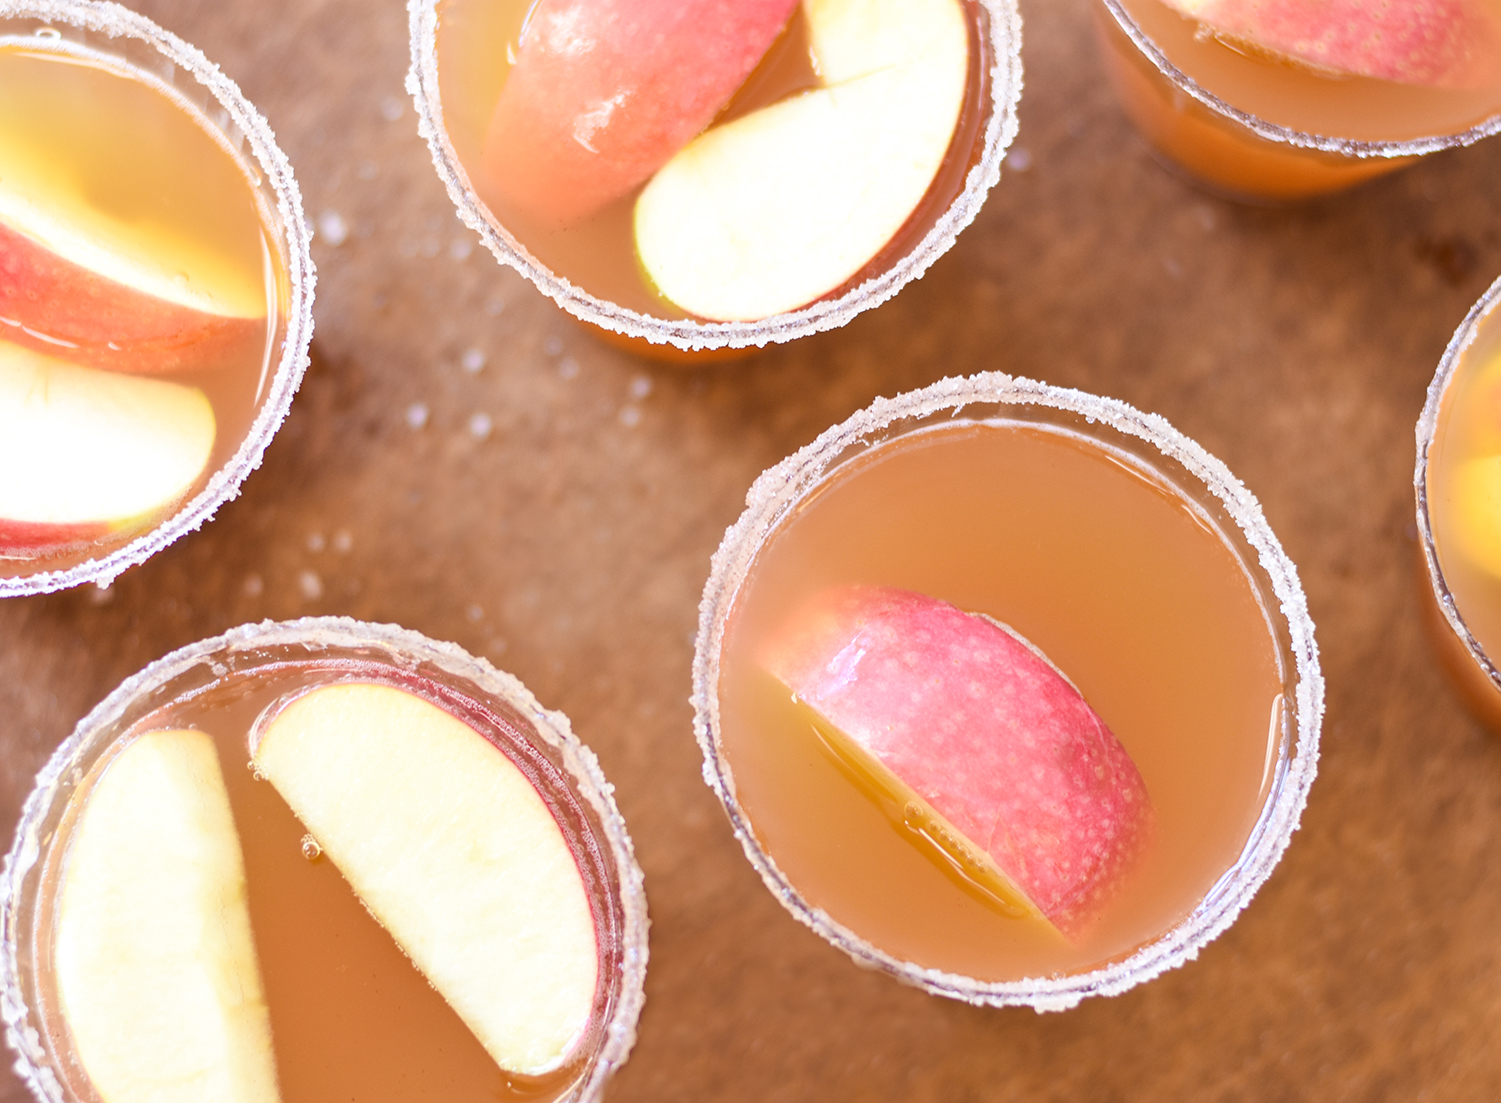 Crafts & Cocktails: Apple Cider Mimosa